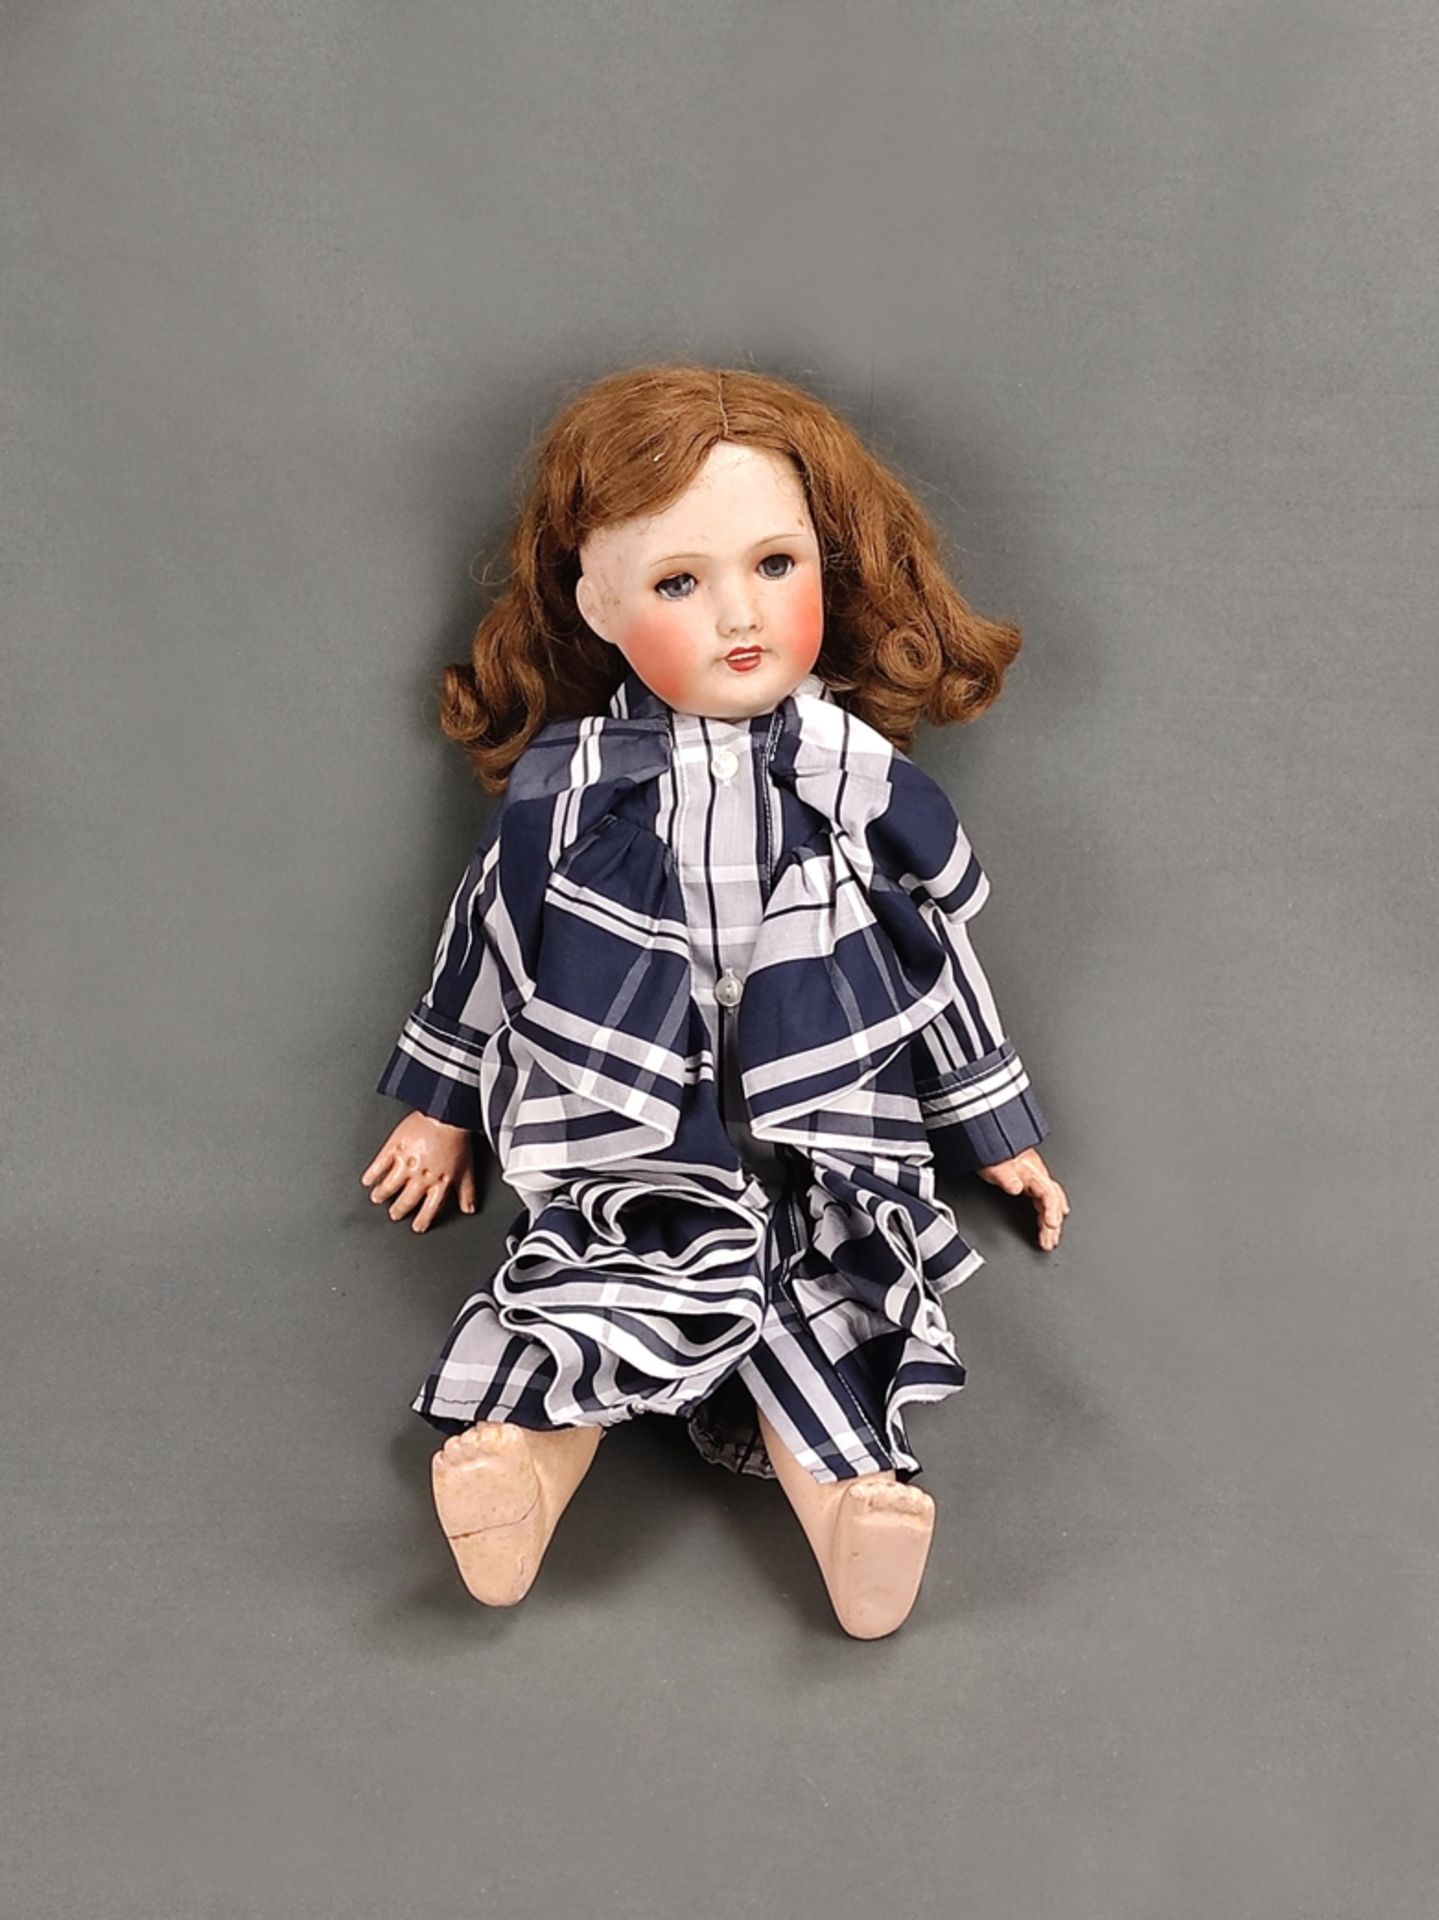 Doll girl, Unis France, porcelain crank head with sleeping eyes, brown human hair wig, length 47cm